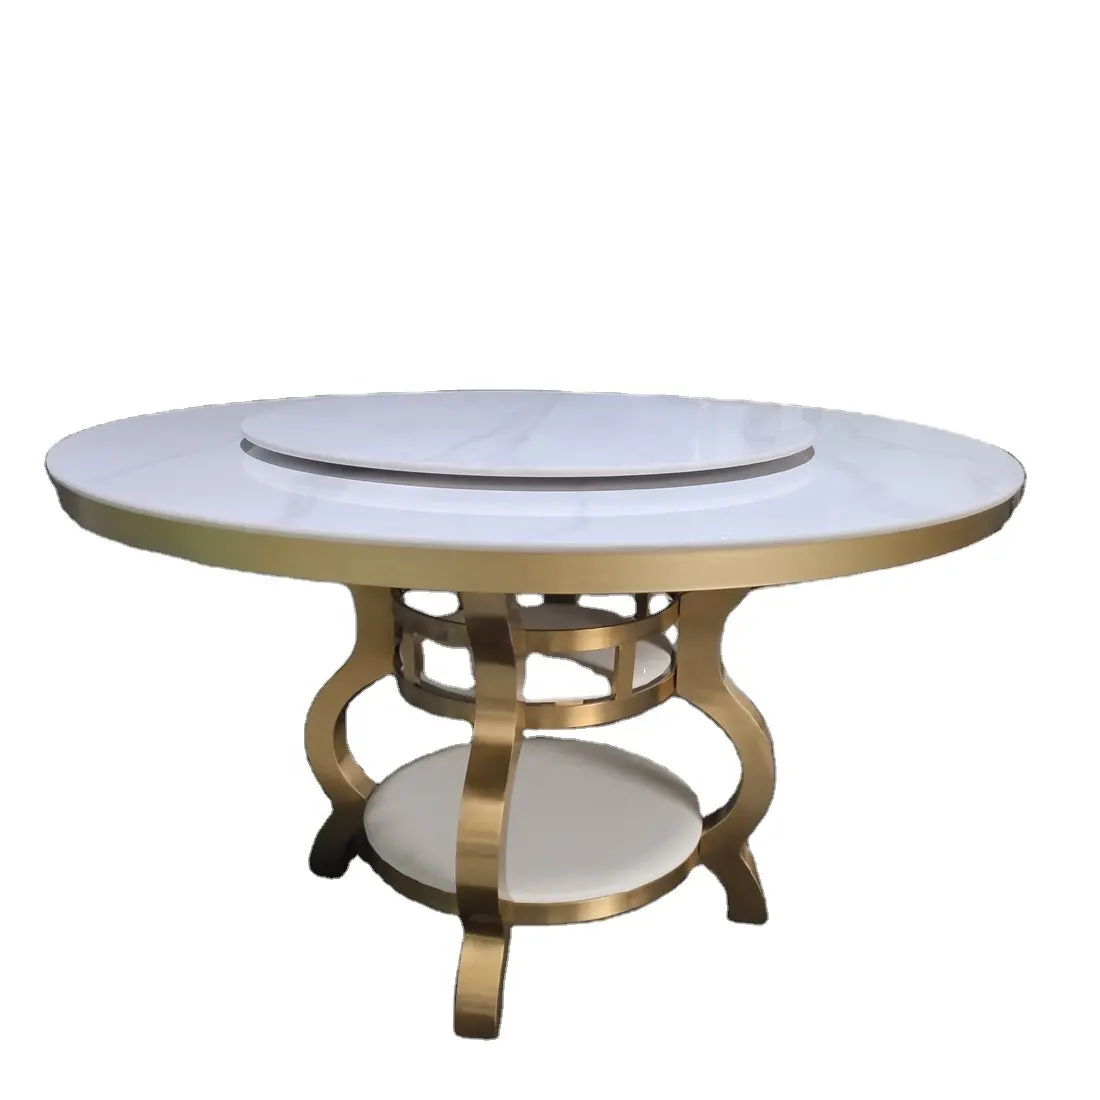 Mesas DE BODA redondas modernas y baratas de acero inoxidable dorado para eventos gastronómicos